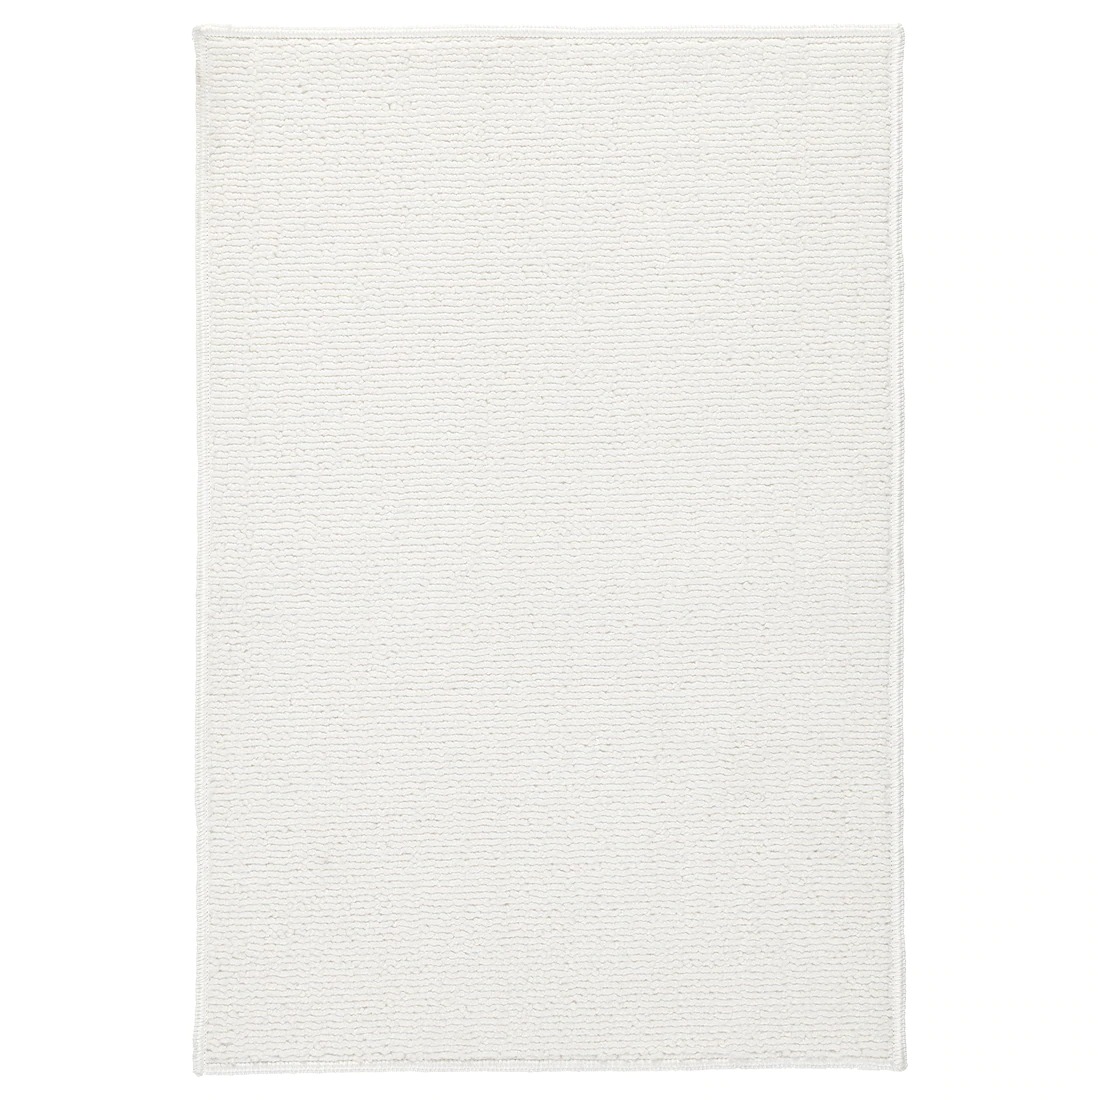 【IKEA Original】FINTSEN -フィントセン- バスマット ホワイト 40x60 cm画像